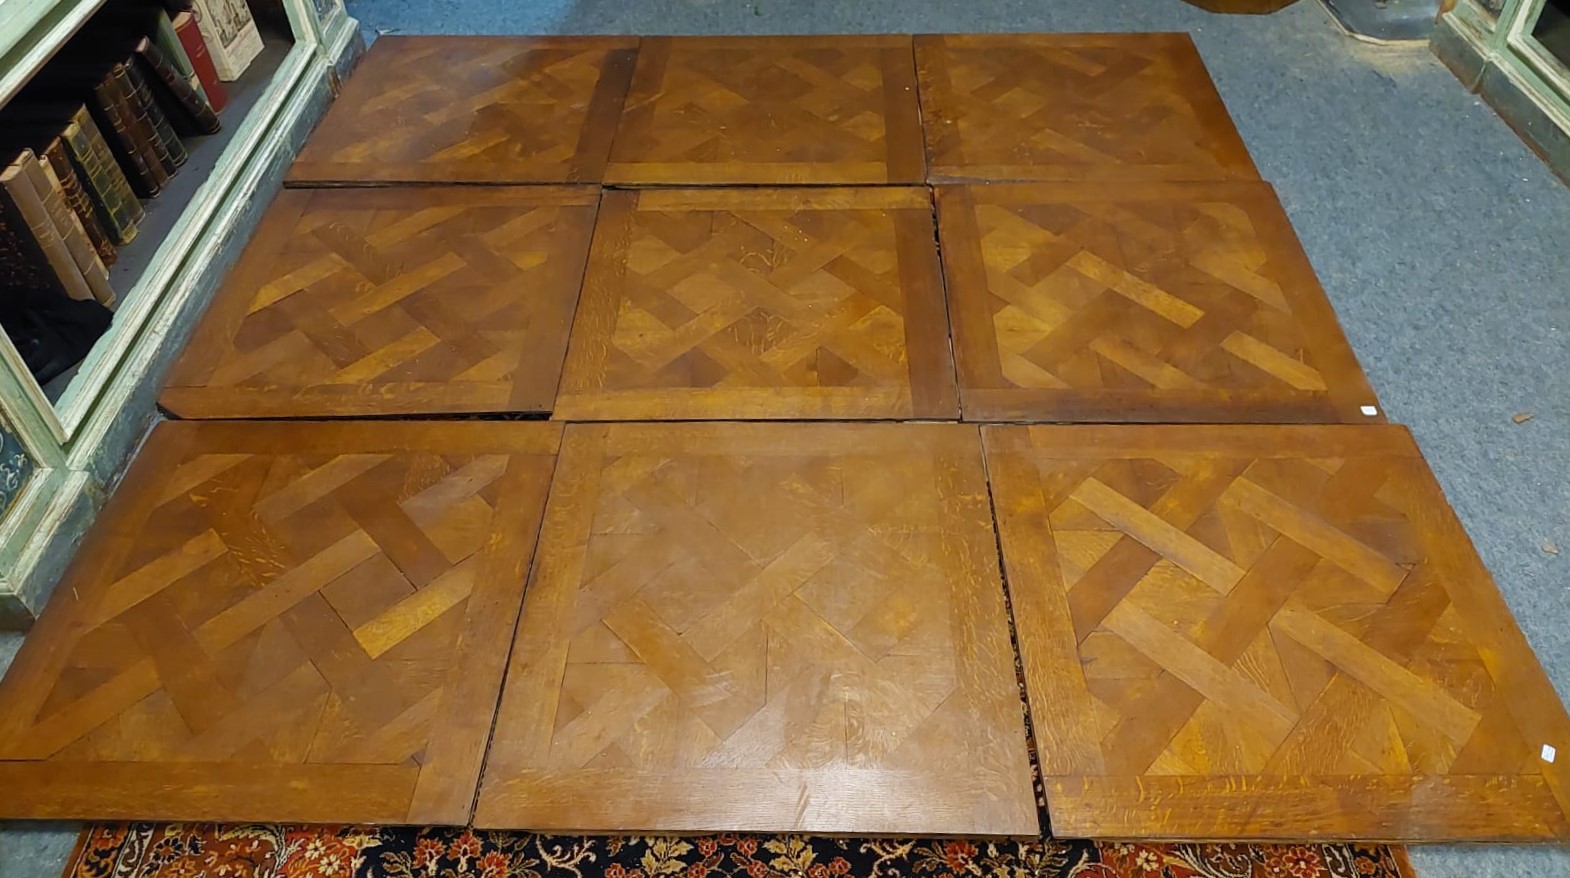 DARP204 - N. 9 Versailles oak tiles, period 7/800, measuring 84.5 x 84,5 x D 2